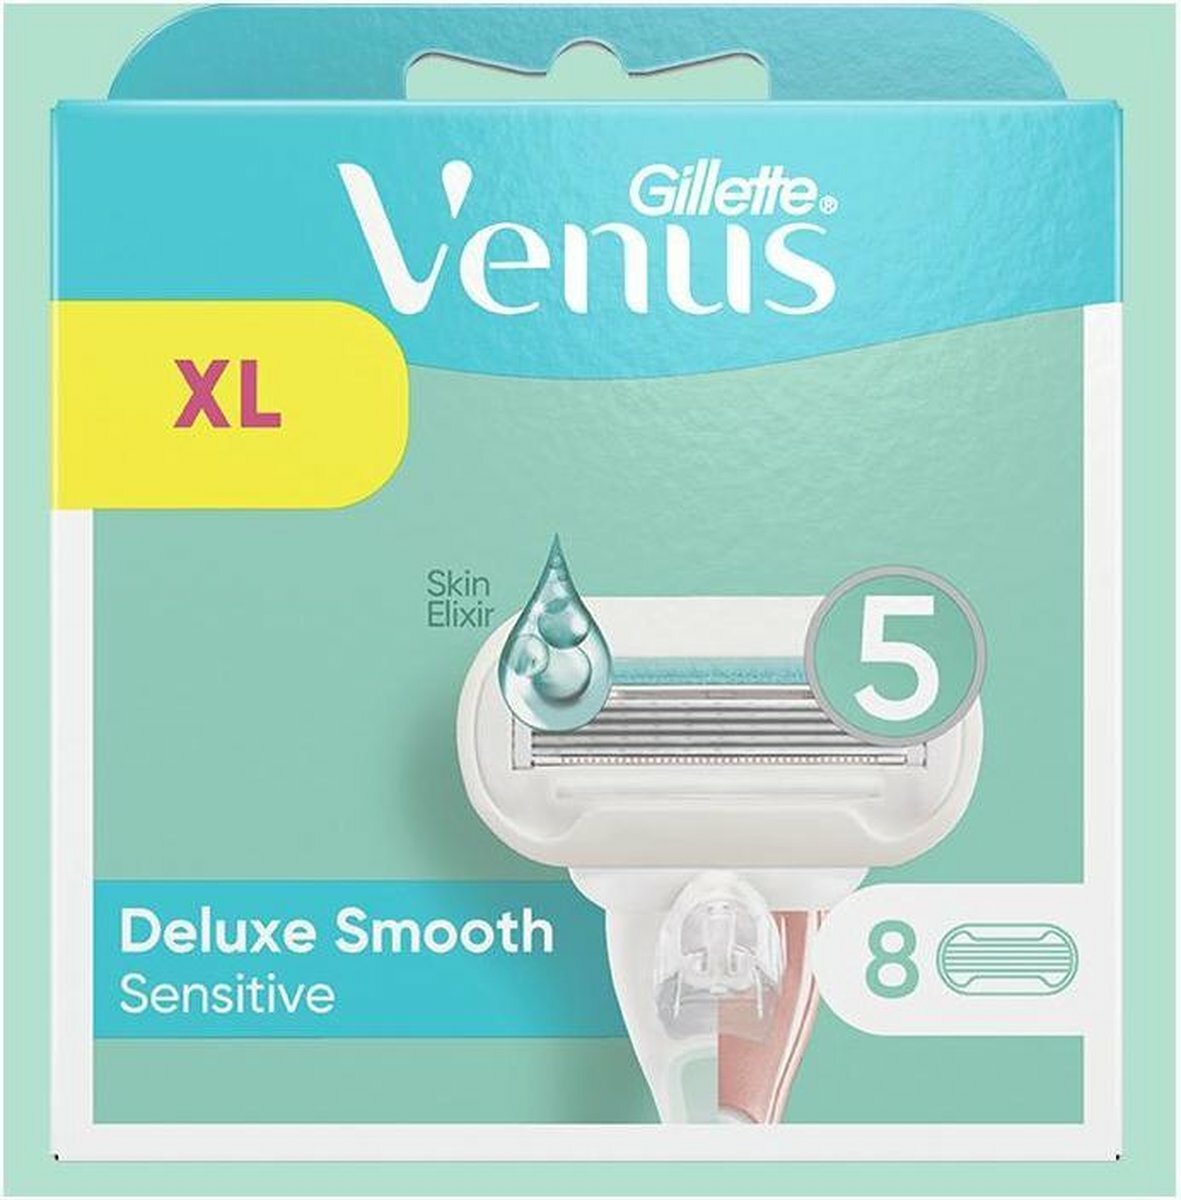 Сменные кассеты Gillette Venus Deluxe Smooth Sensitive Embrace, 8 шт картриджи для бритв gillette venus v edition deluxe smooth sensitive 4 шт